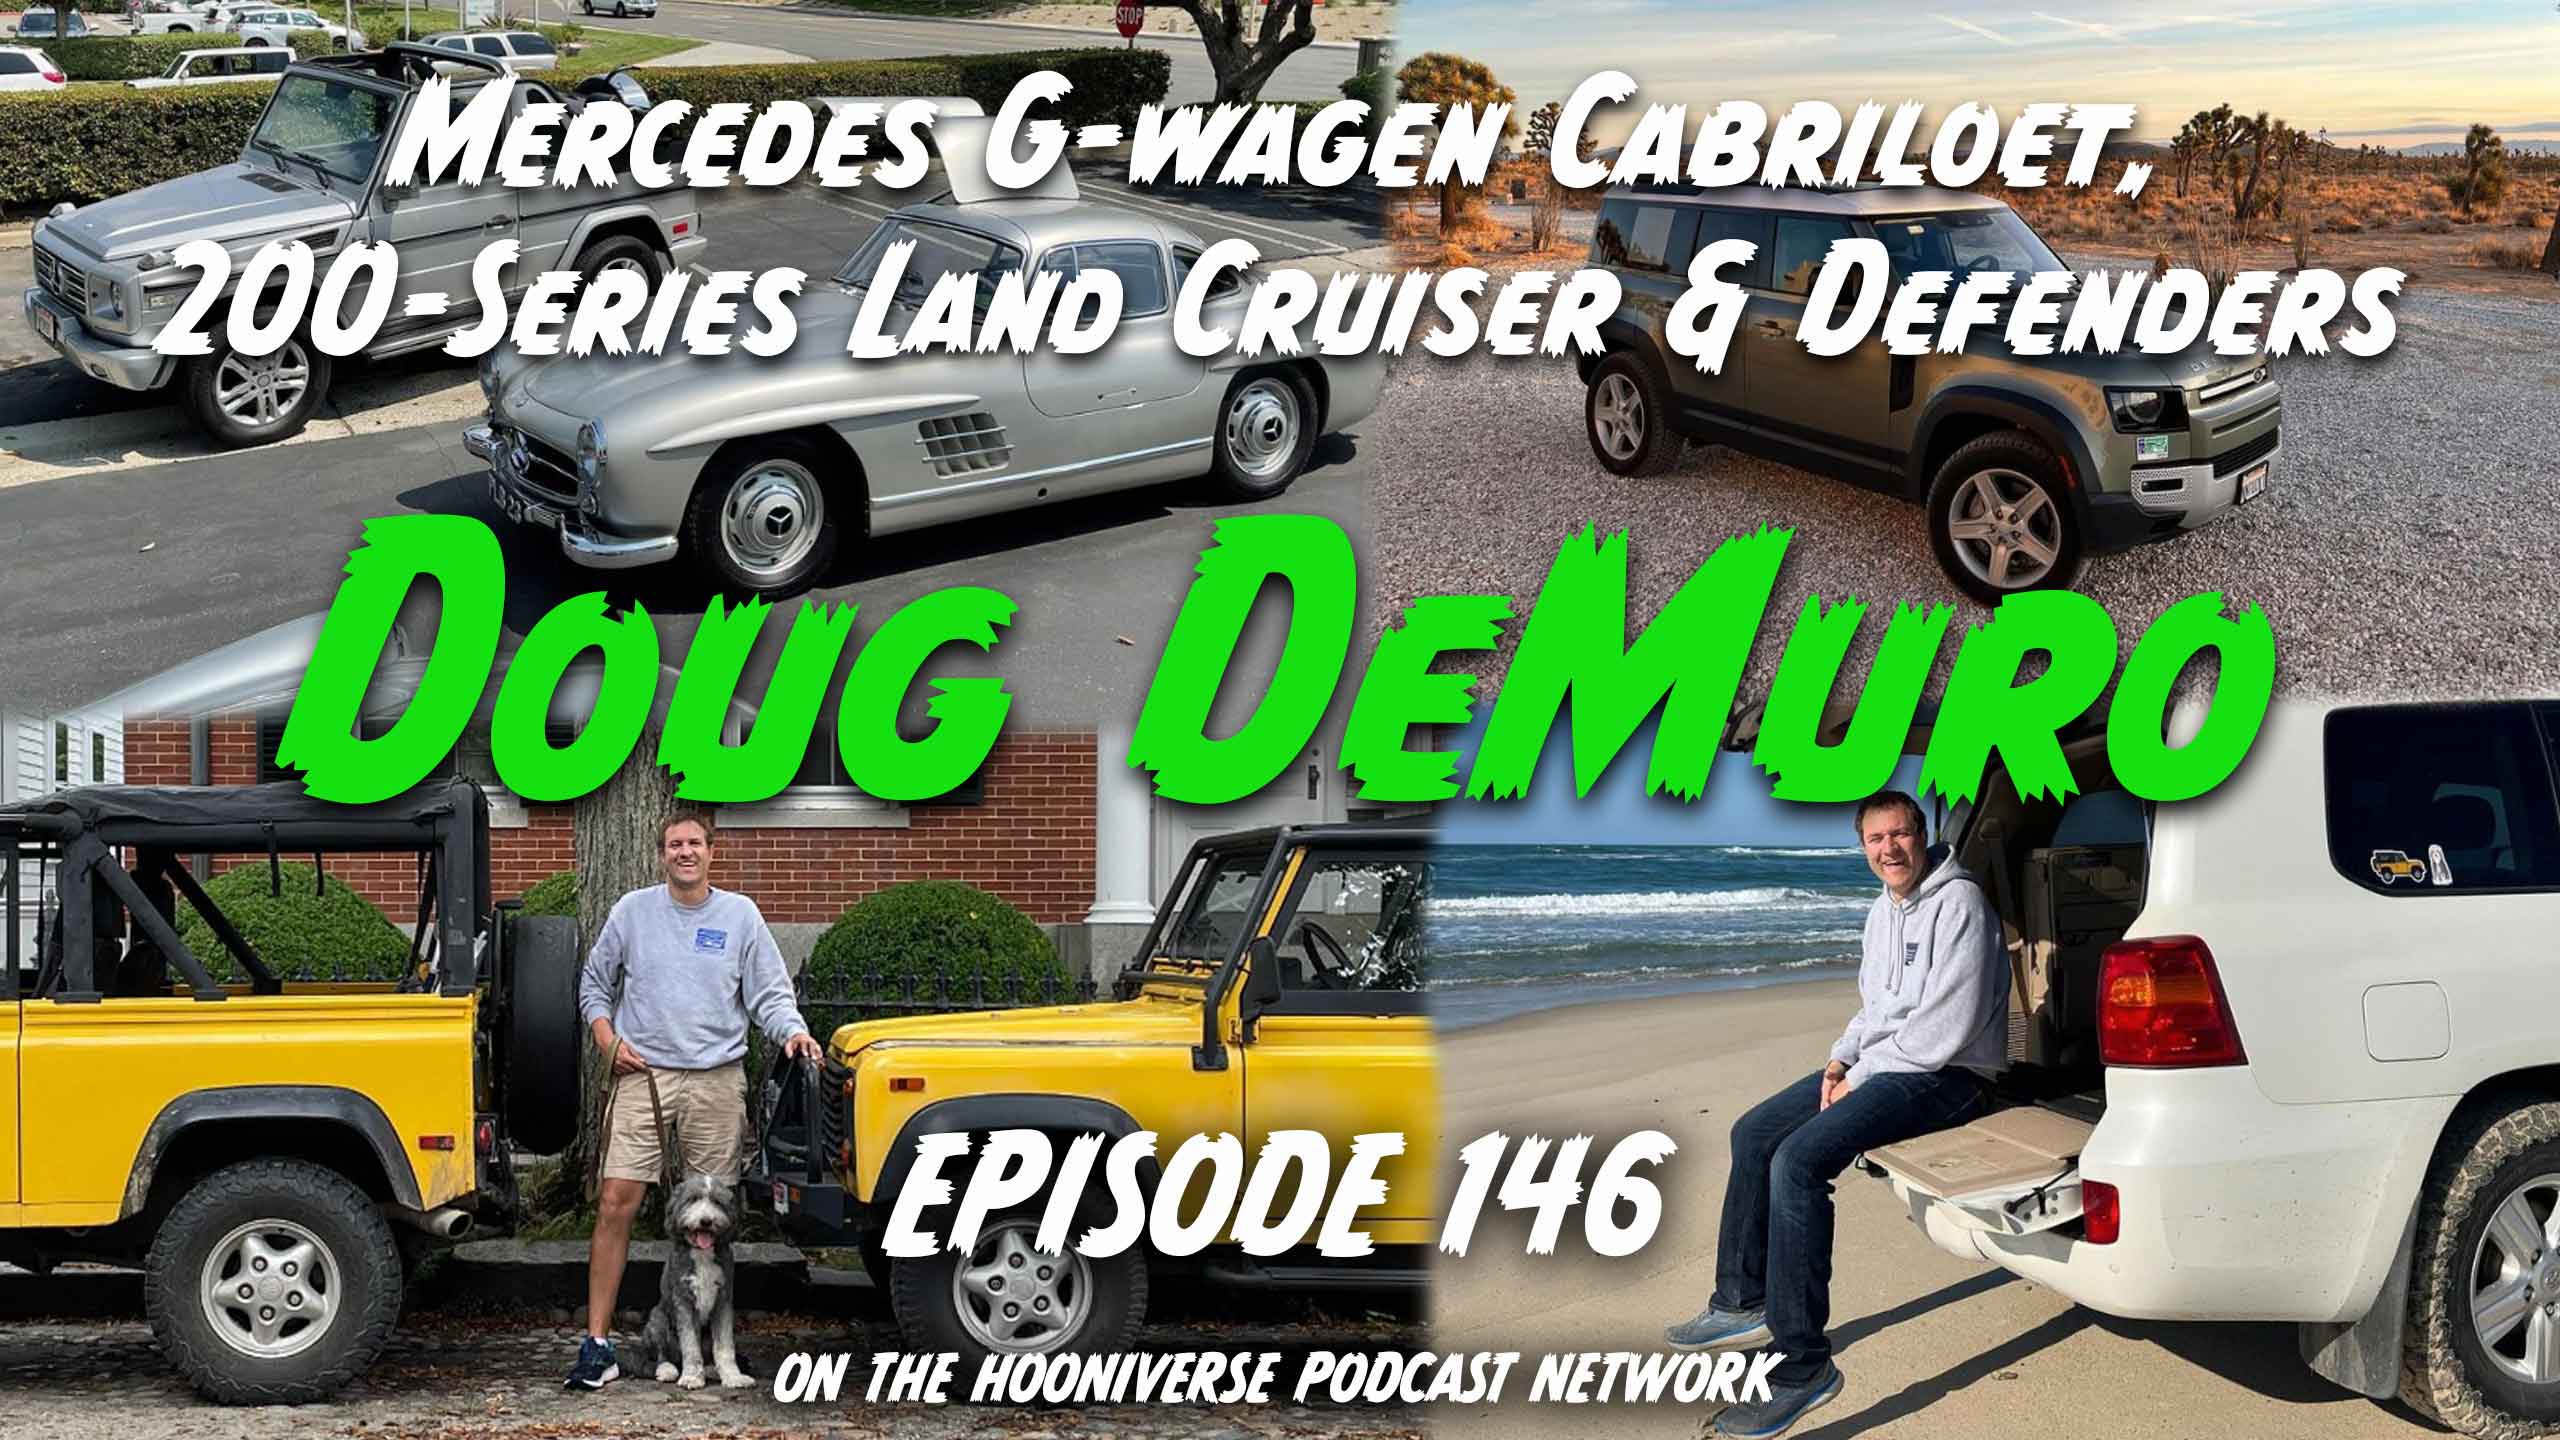 Doug-DeMuro-Defender-90-Land-Cruiser-200-G-wagen-Cabriolet-Off-The-Road-Again-Podcast-Episode-146